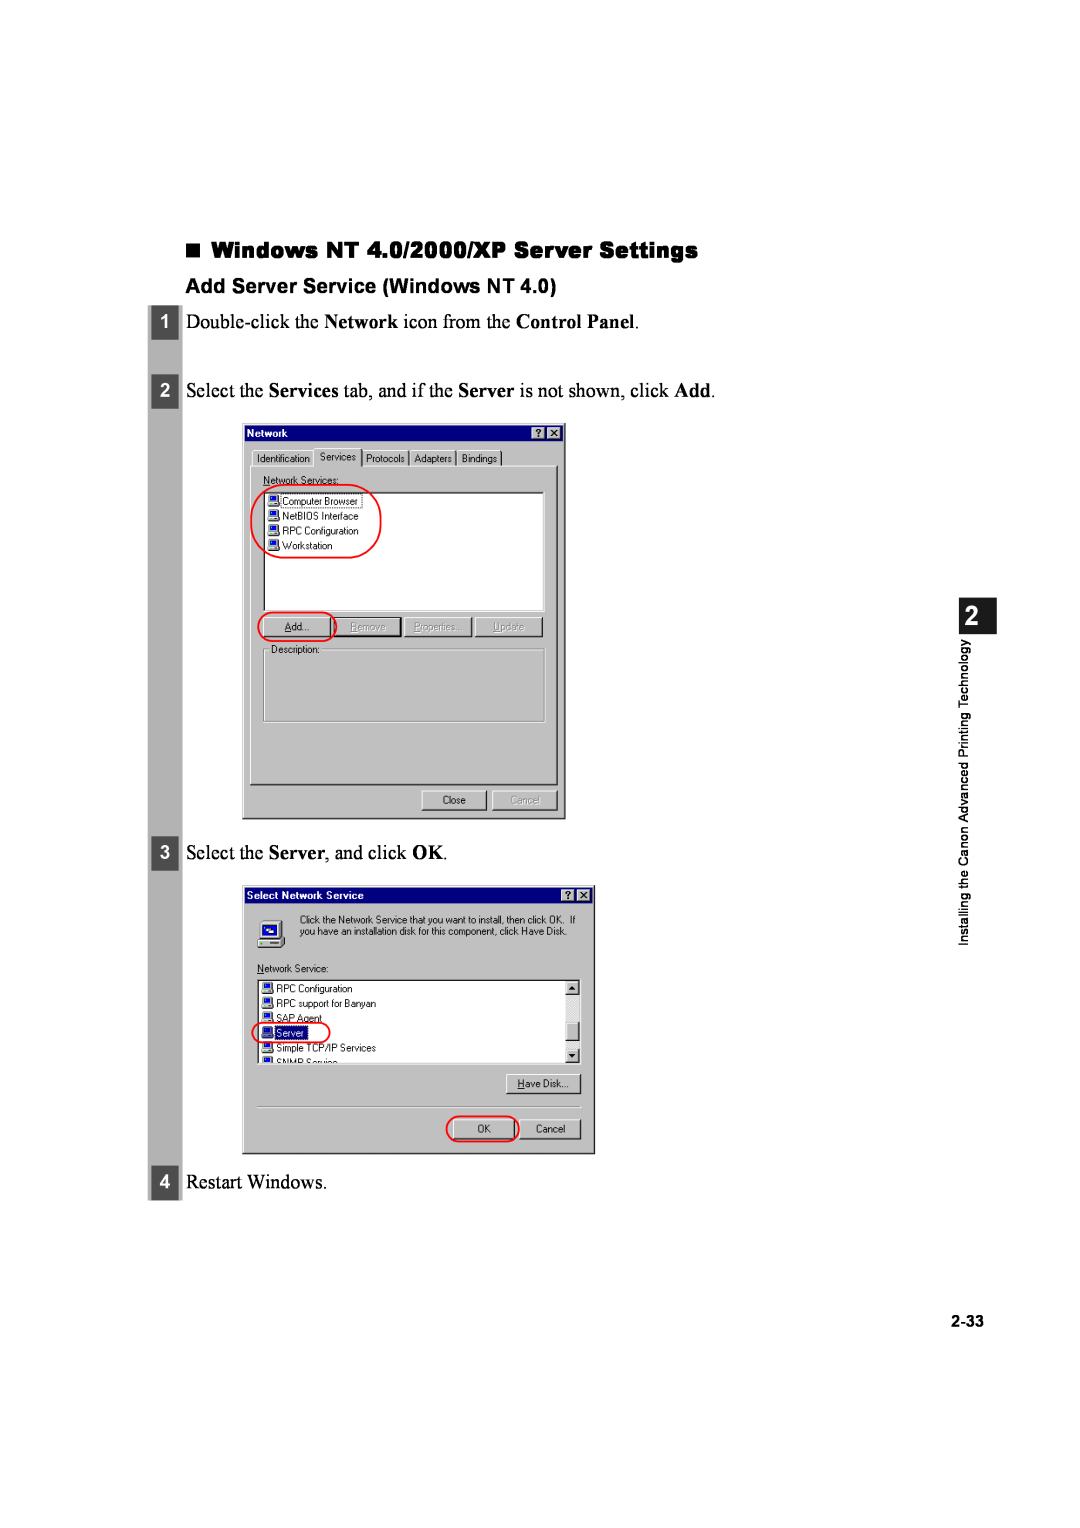 Canon D600 manual Windows NT 4.0/2000/XP Server Settings, Add Server Service Windows NT, 2-33 